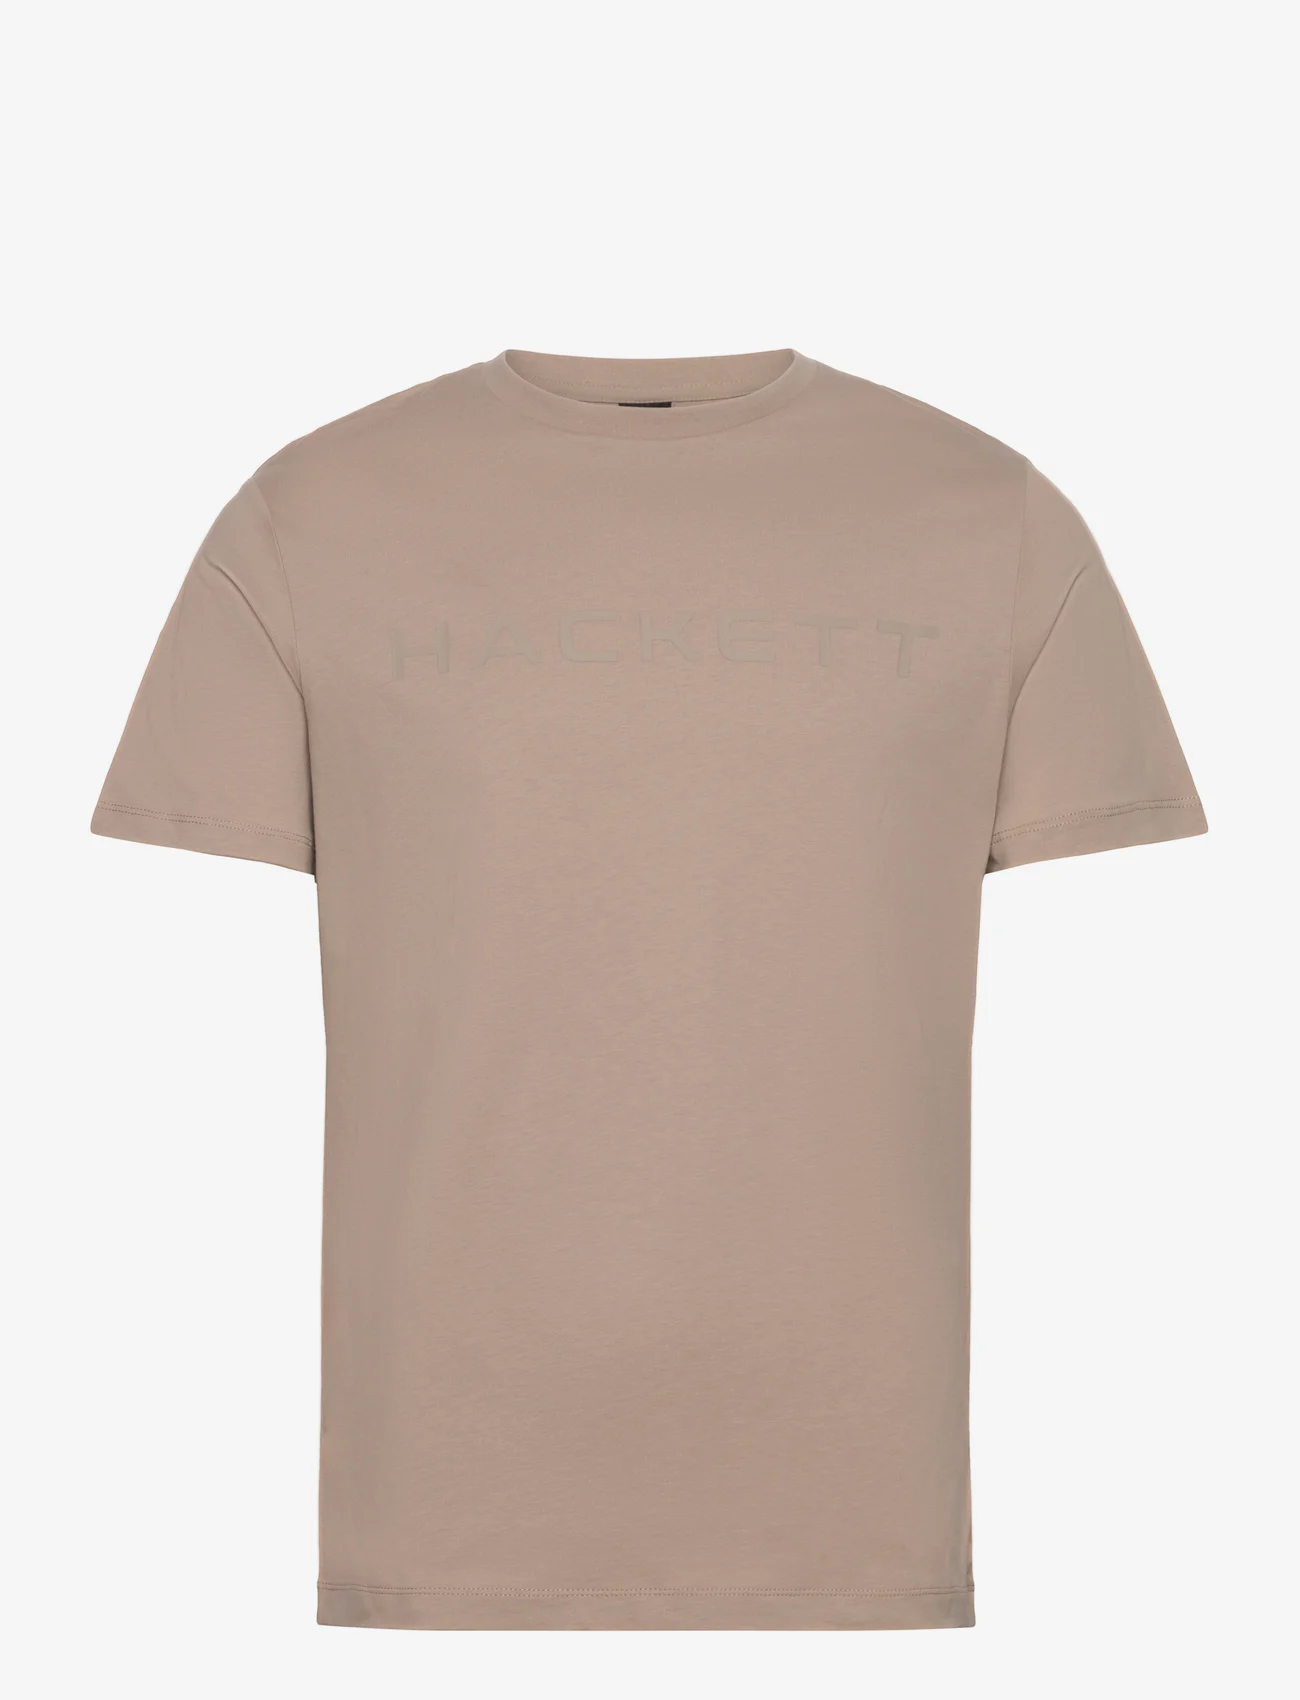 Hackett London - ESSENTIAL TEE - basic t-shirts - desert khaki - 0